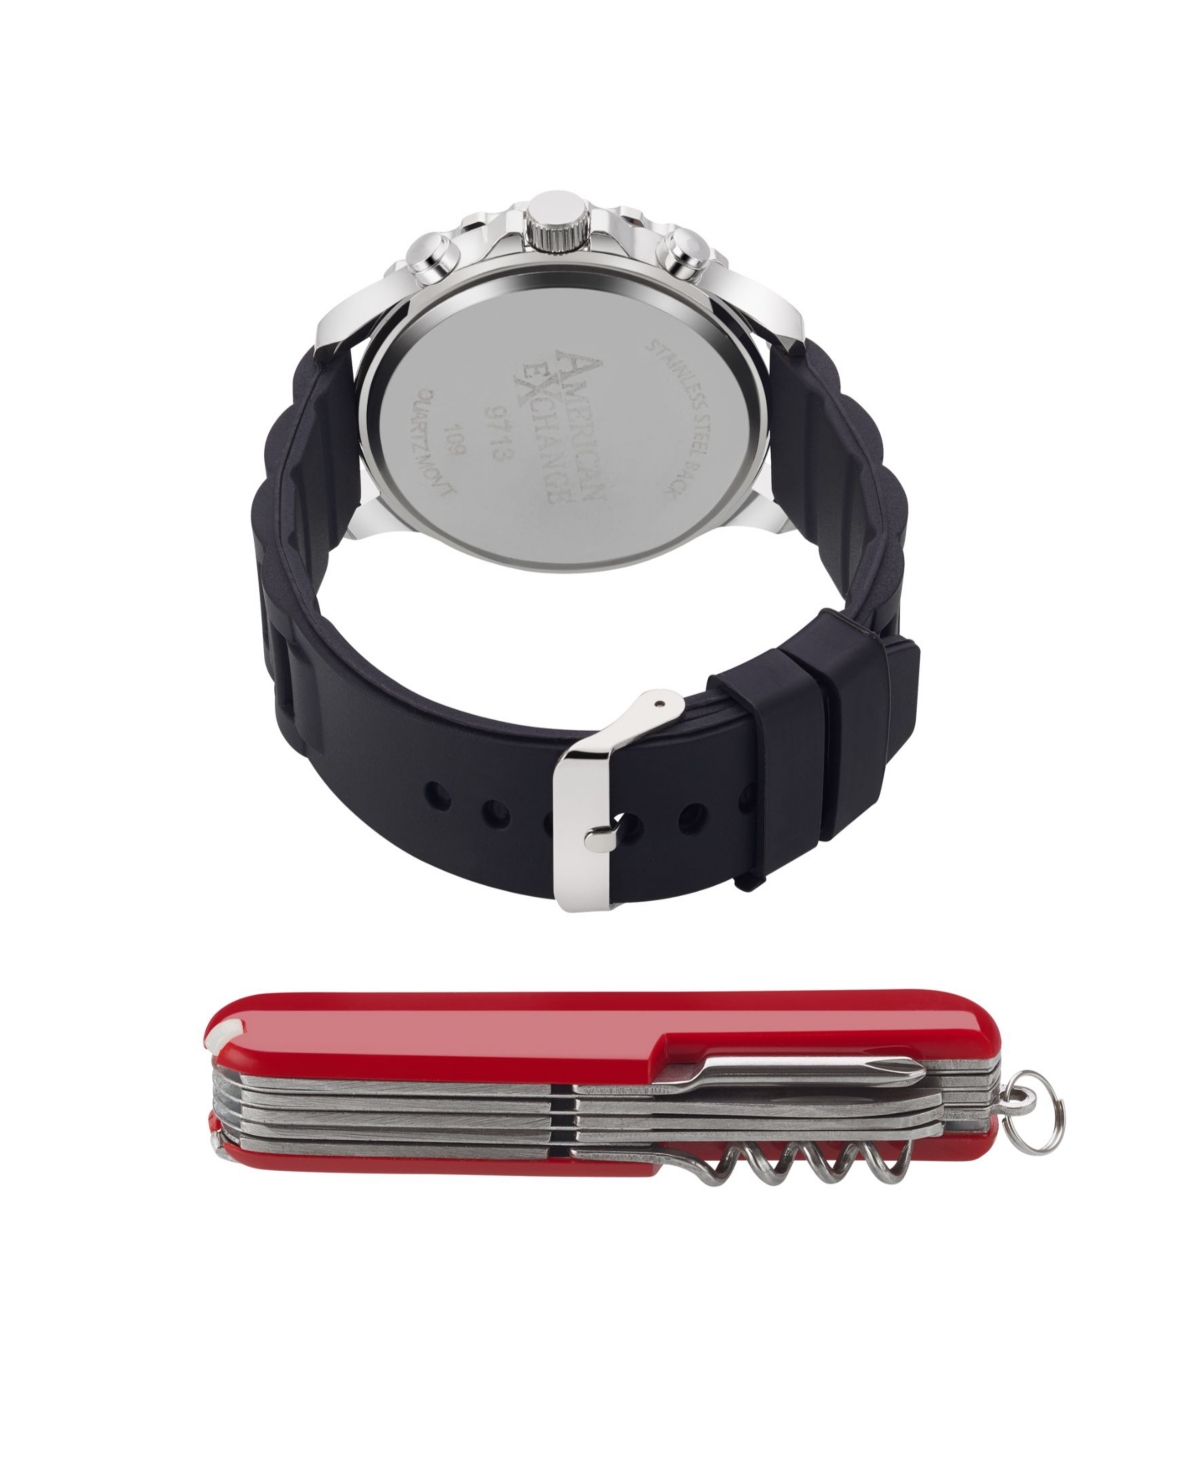 Men's Shiny Black Analog Quartz Watch and Stackable Gift Set - Black